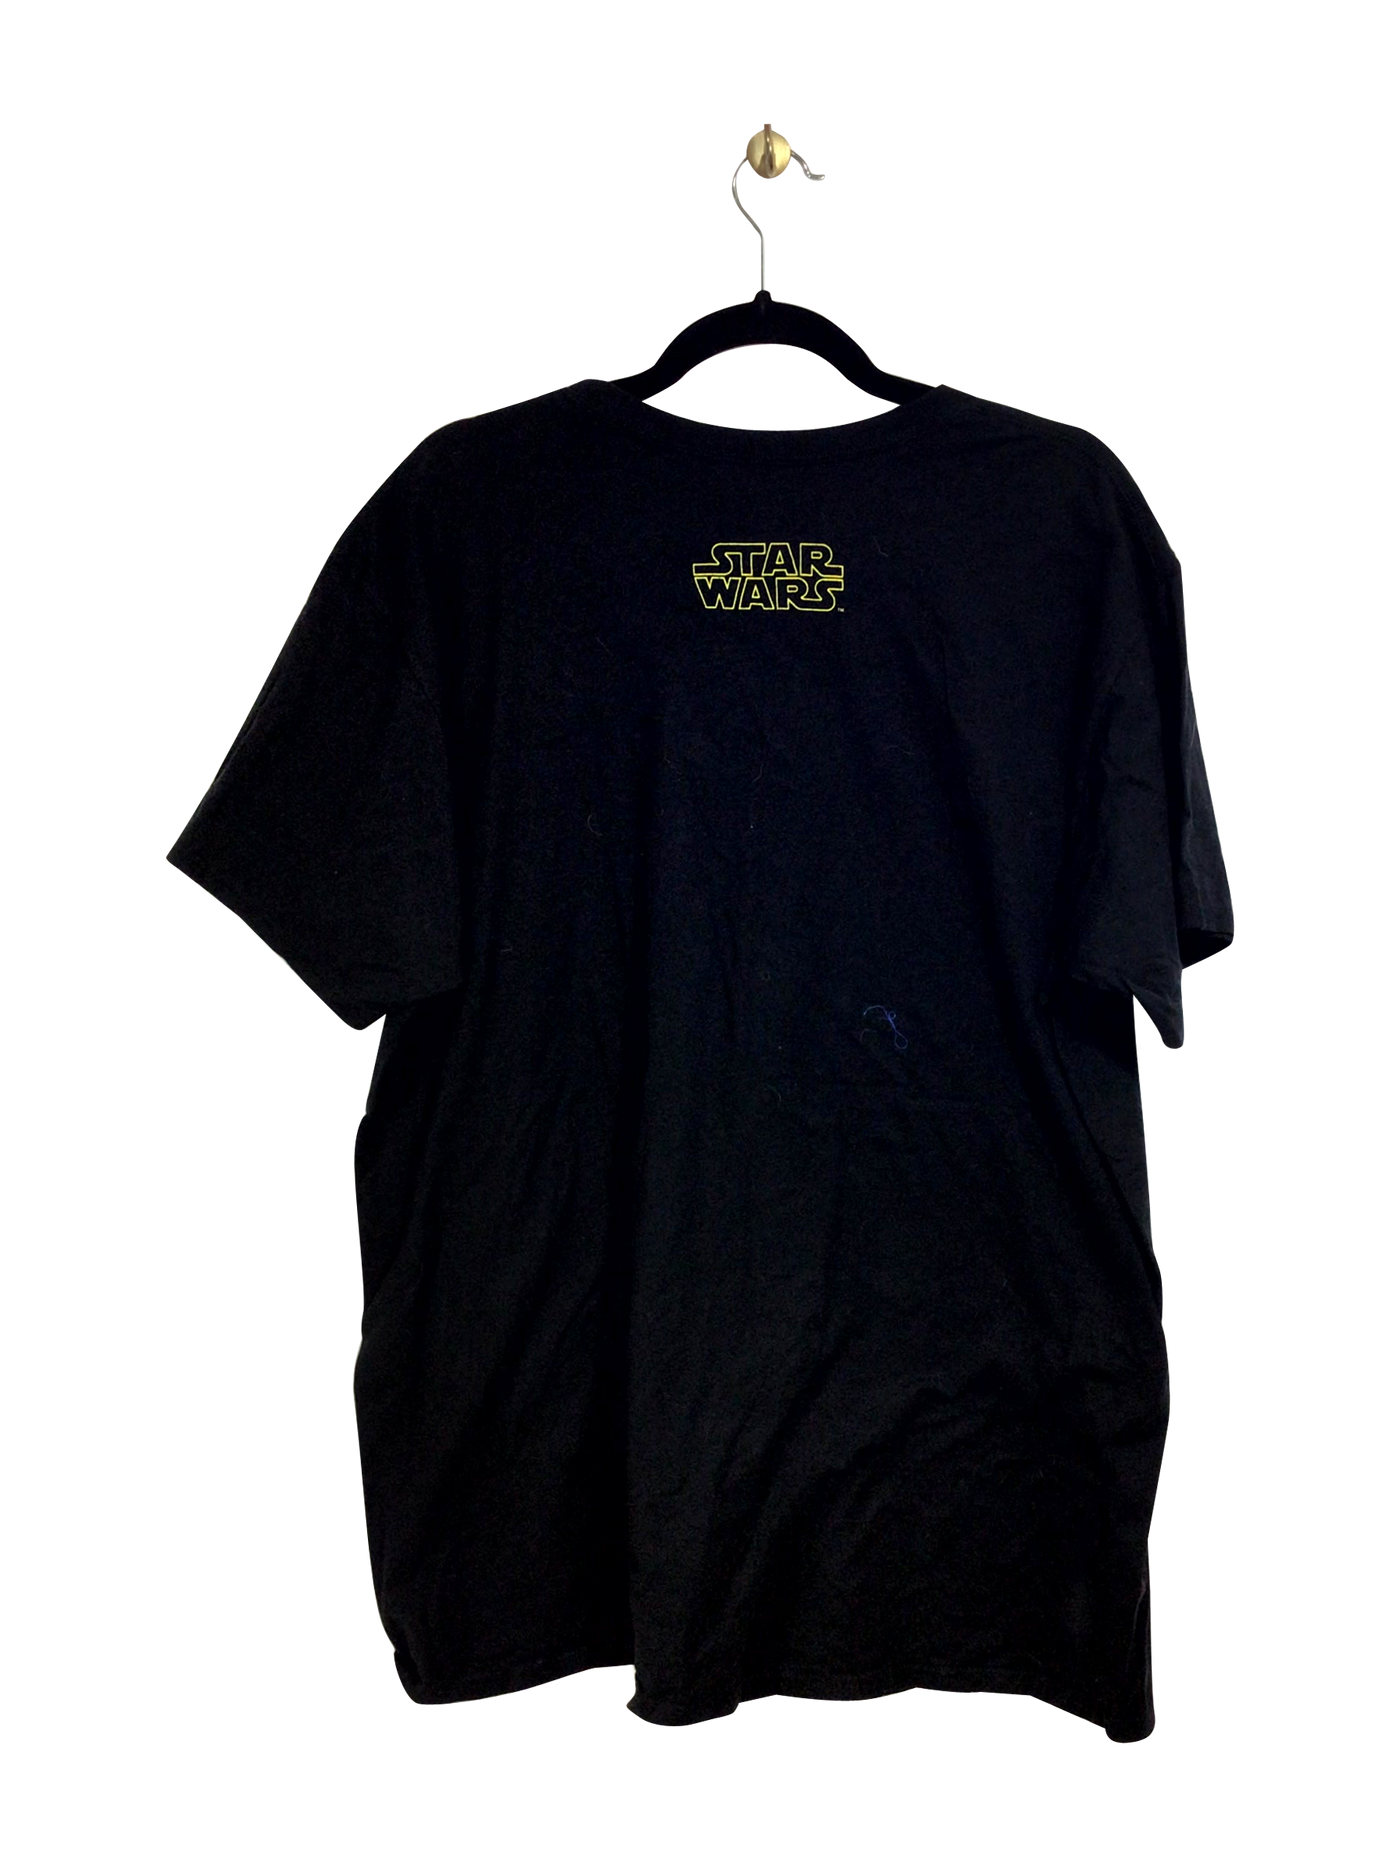 STAR WARS Regular fit T-shirt in Black - Size 2XL | 13.25 $ KOOP